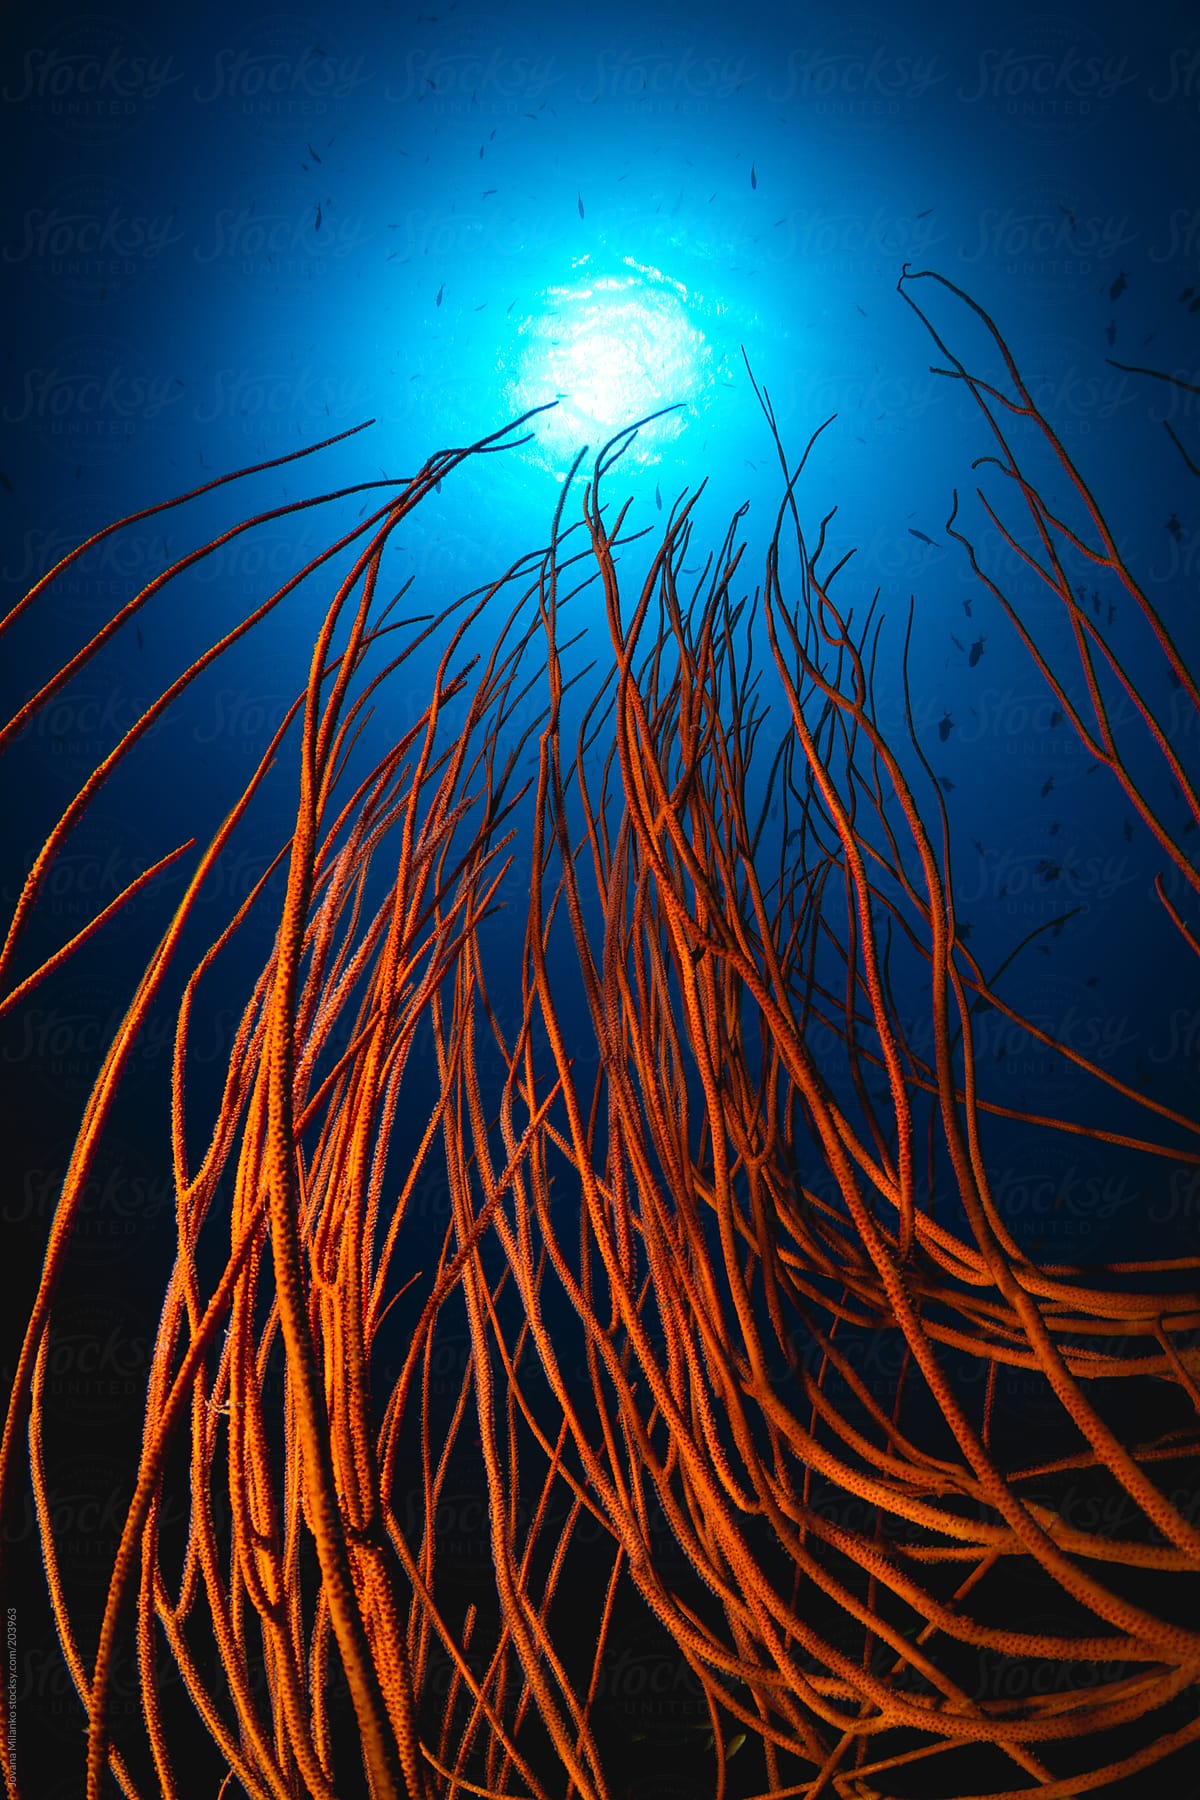 Whip coral underwater background